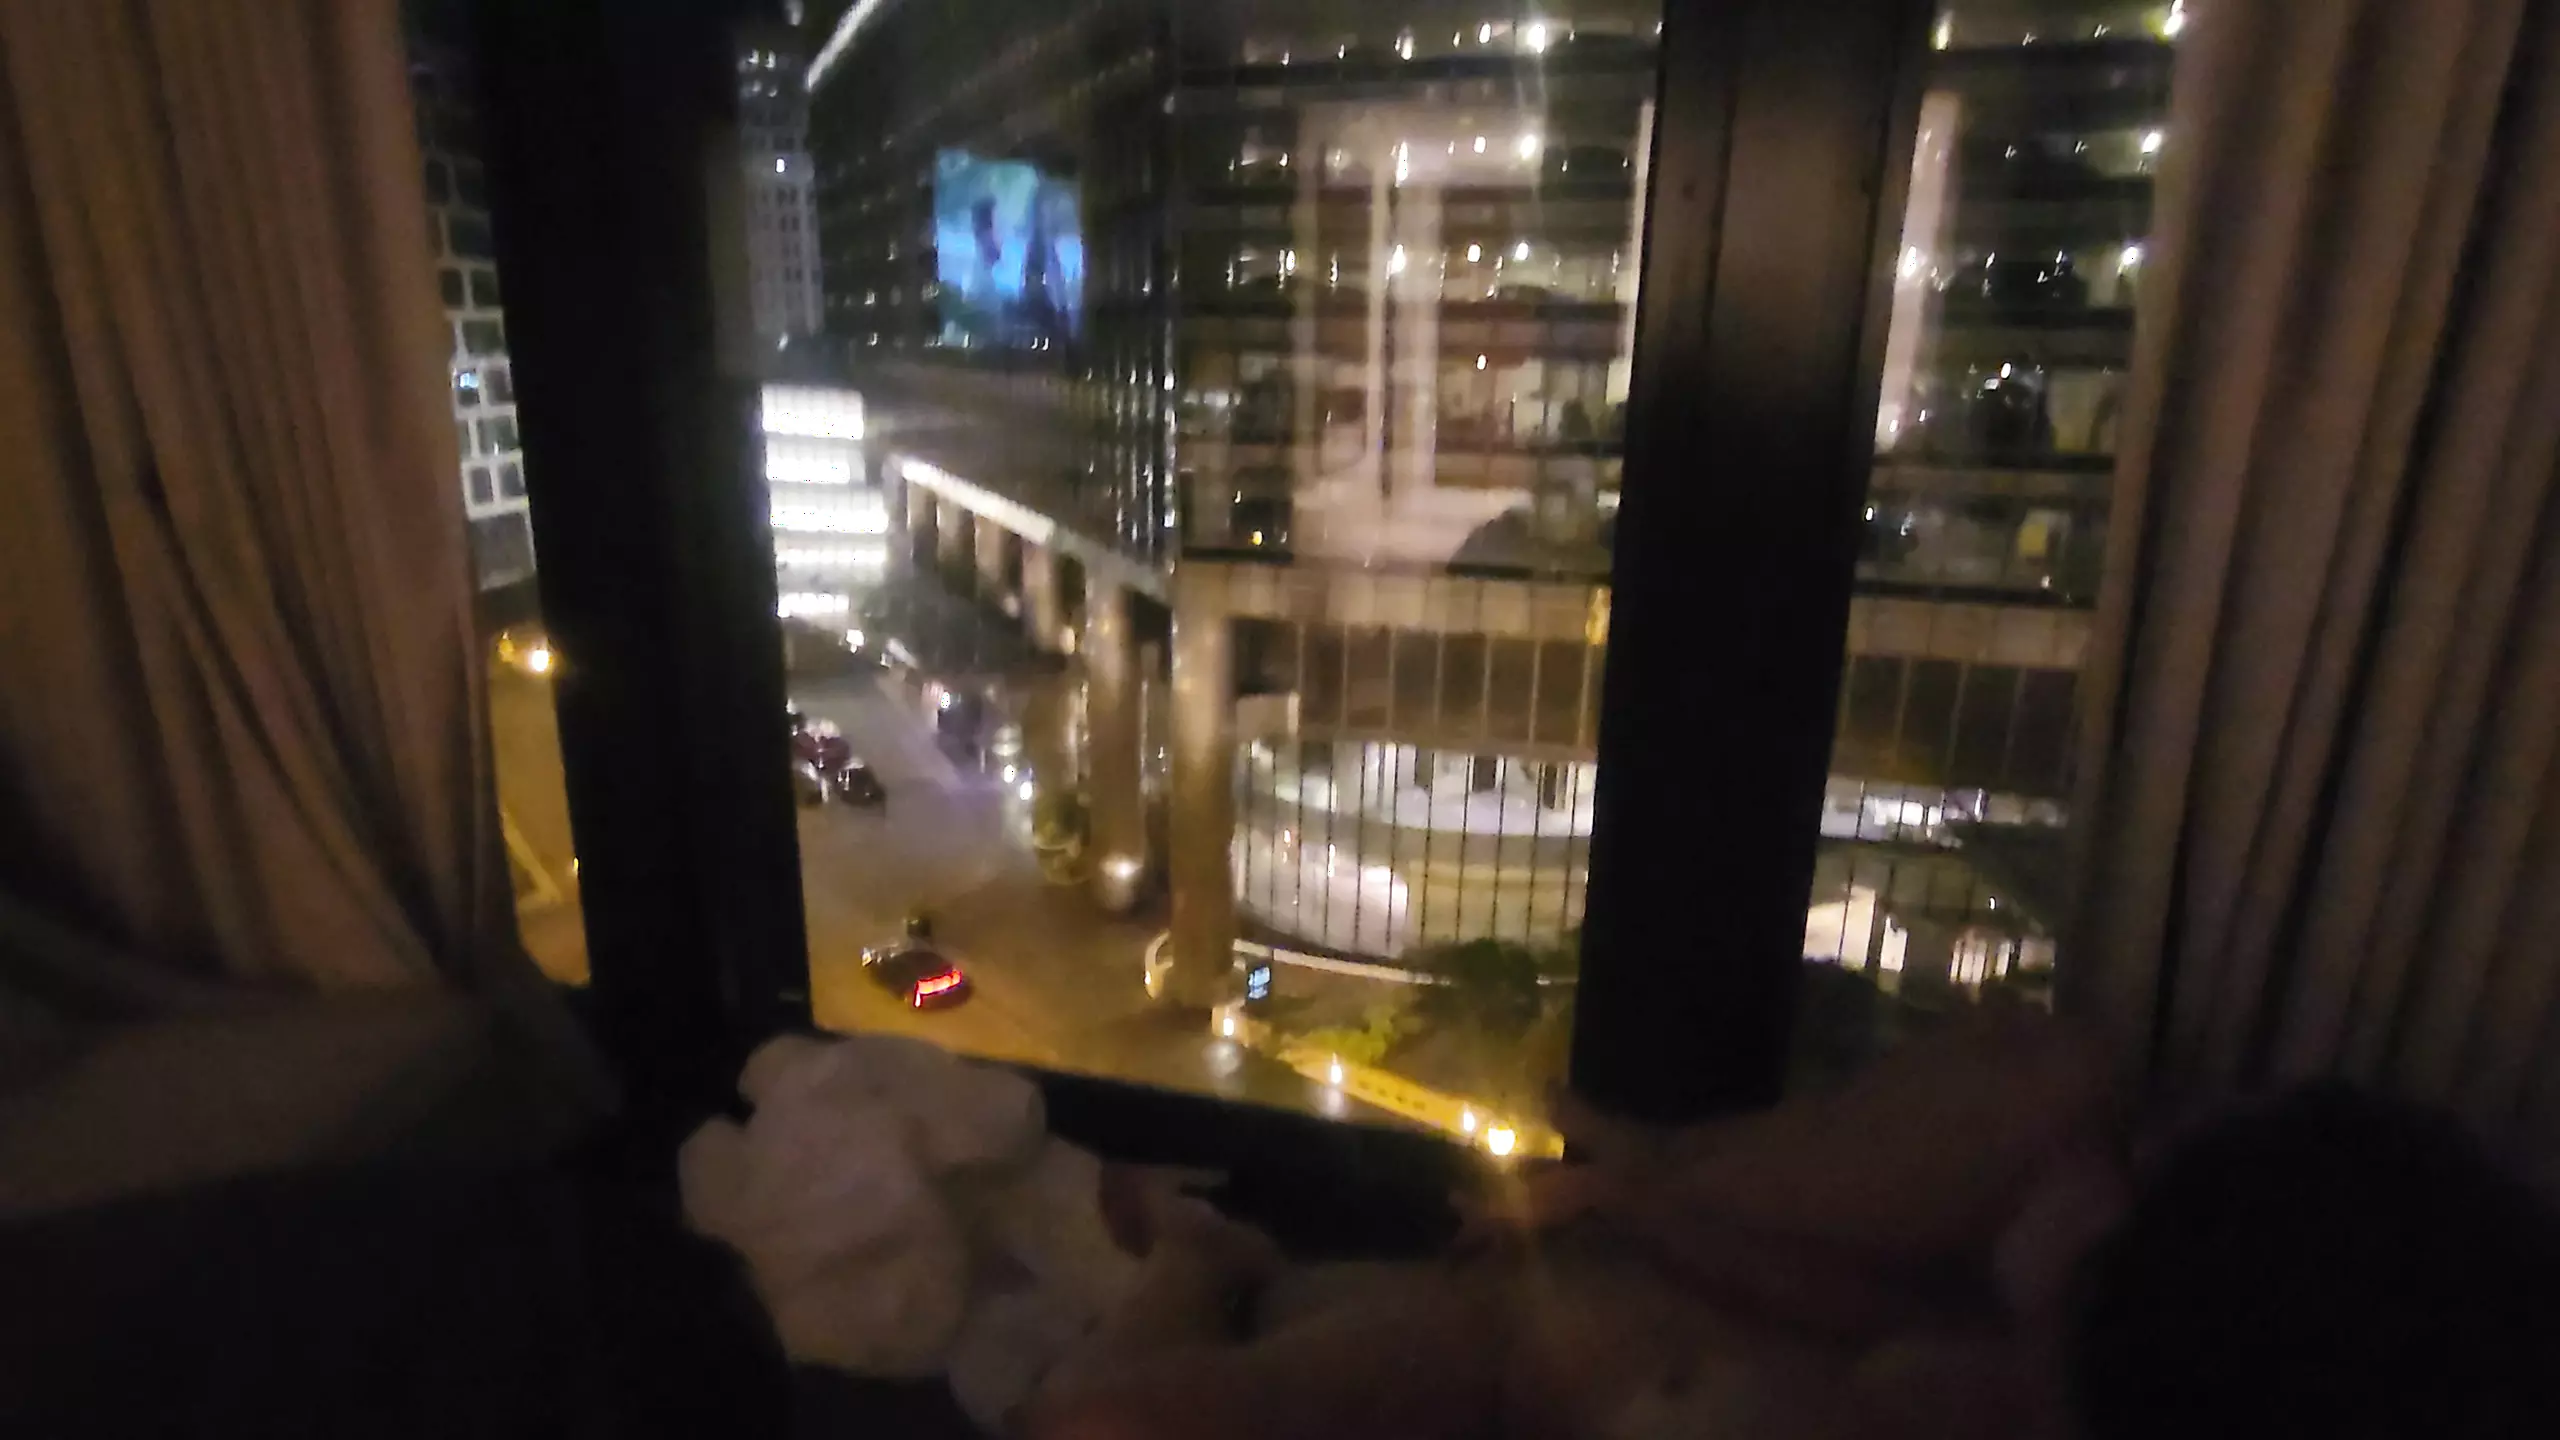 public solo masturbation hotel window image